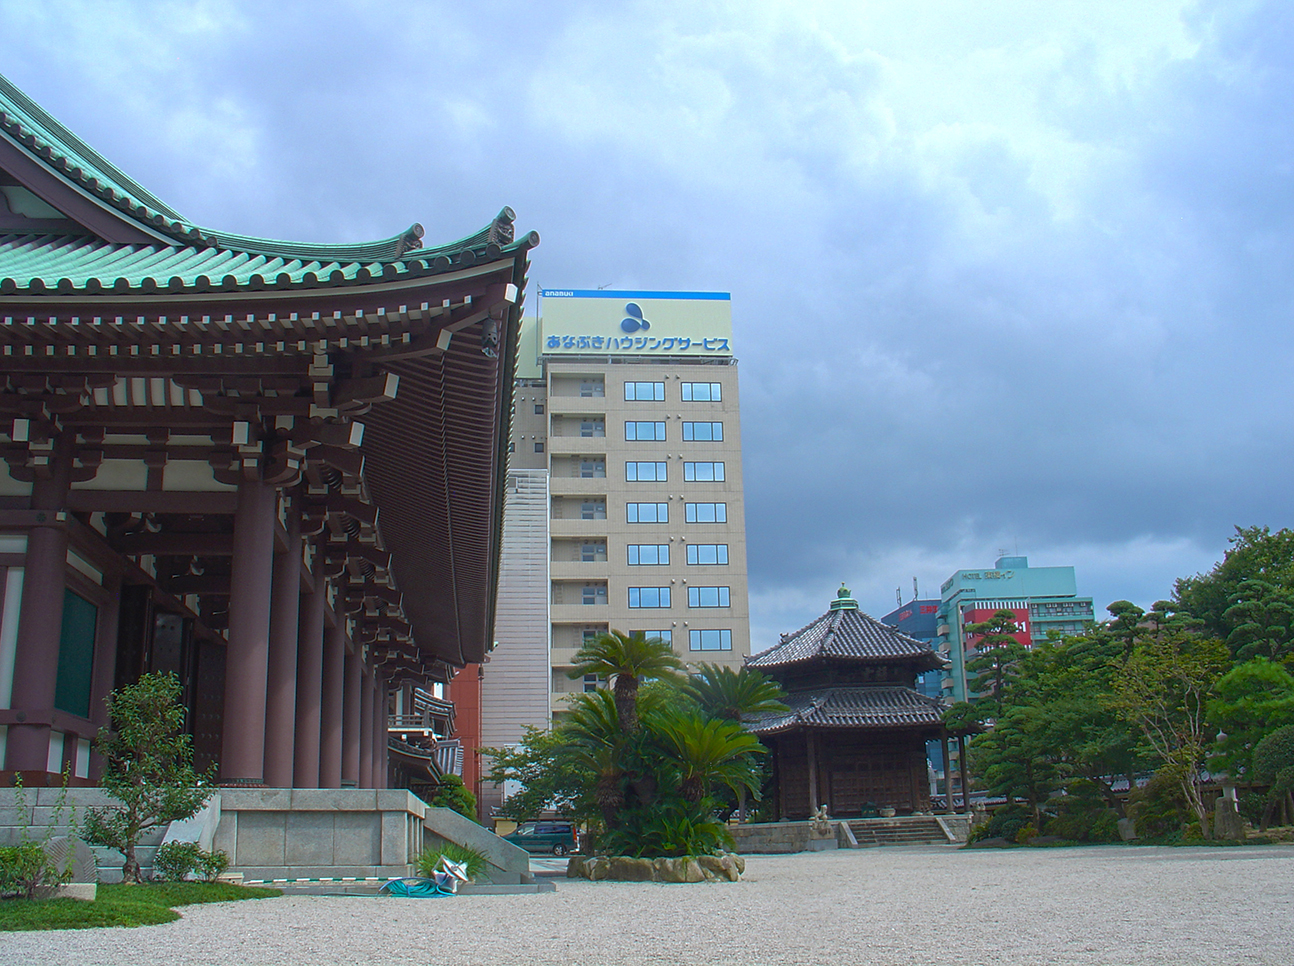 聖福寺 - Shofuku Temple.